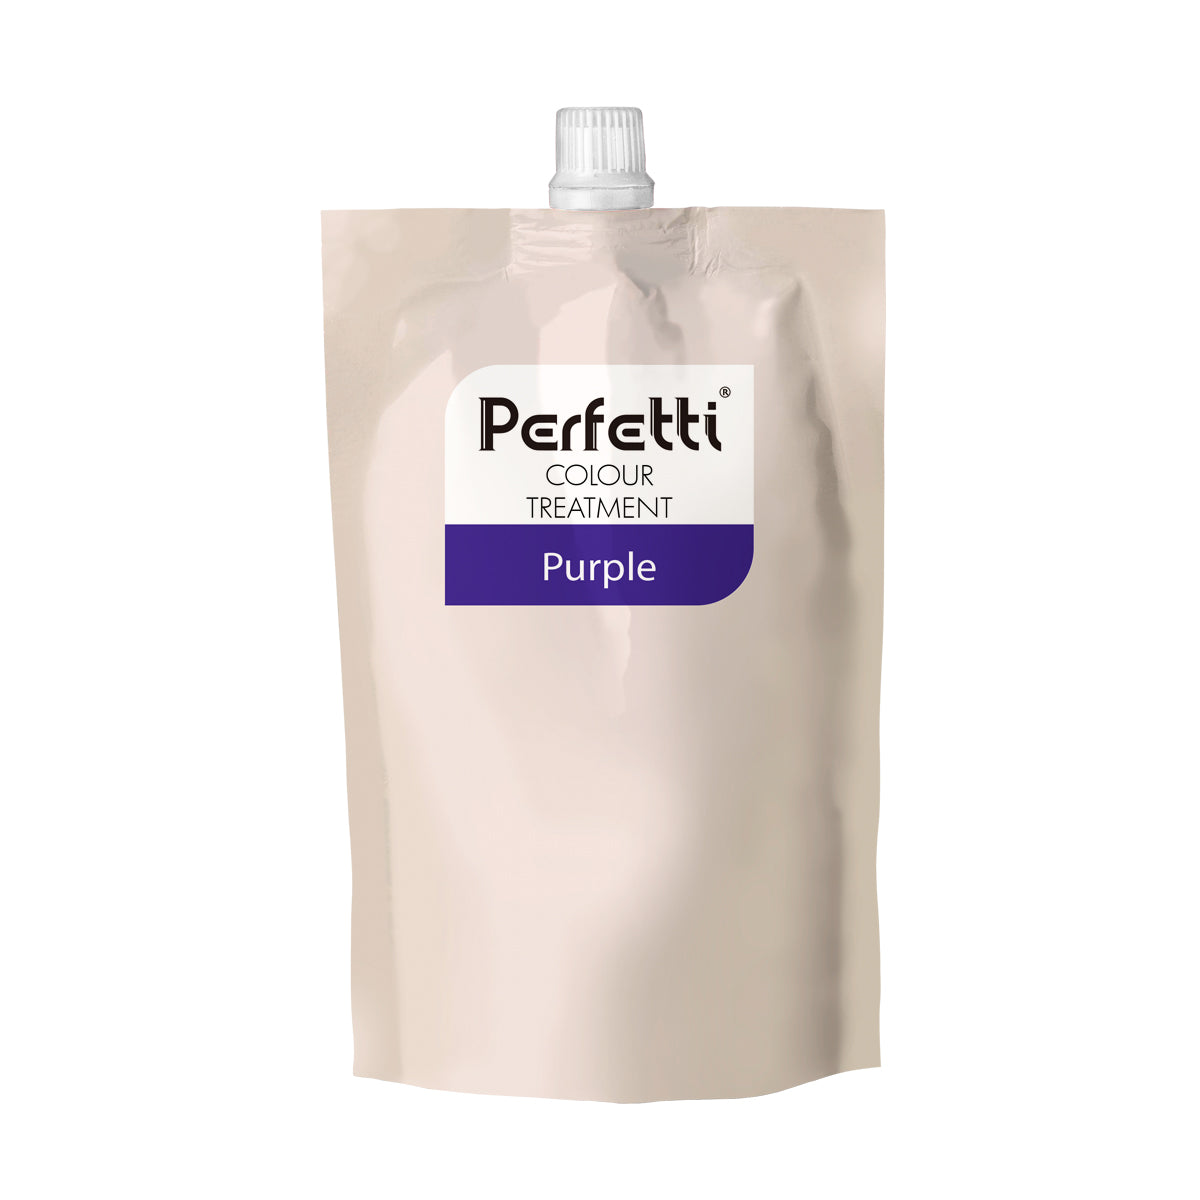 Perfetti Hair Color Treatment 320ml - Purple